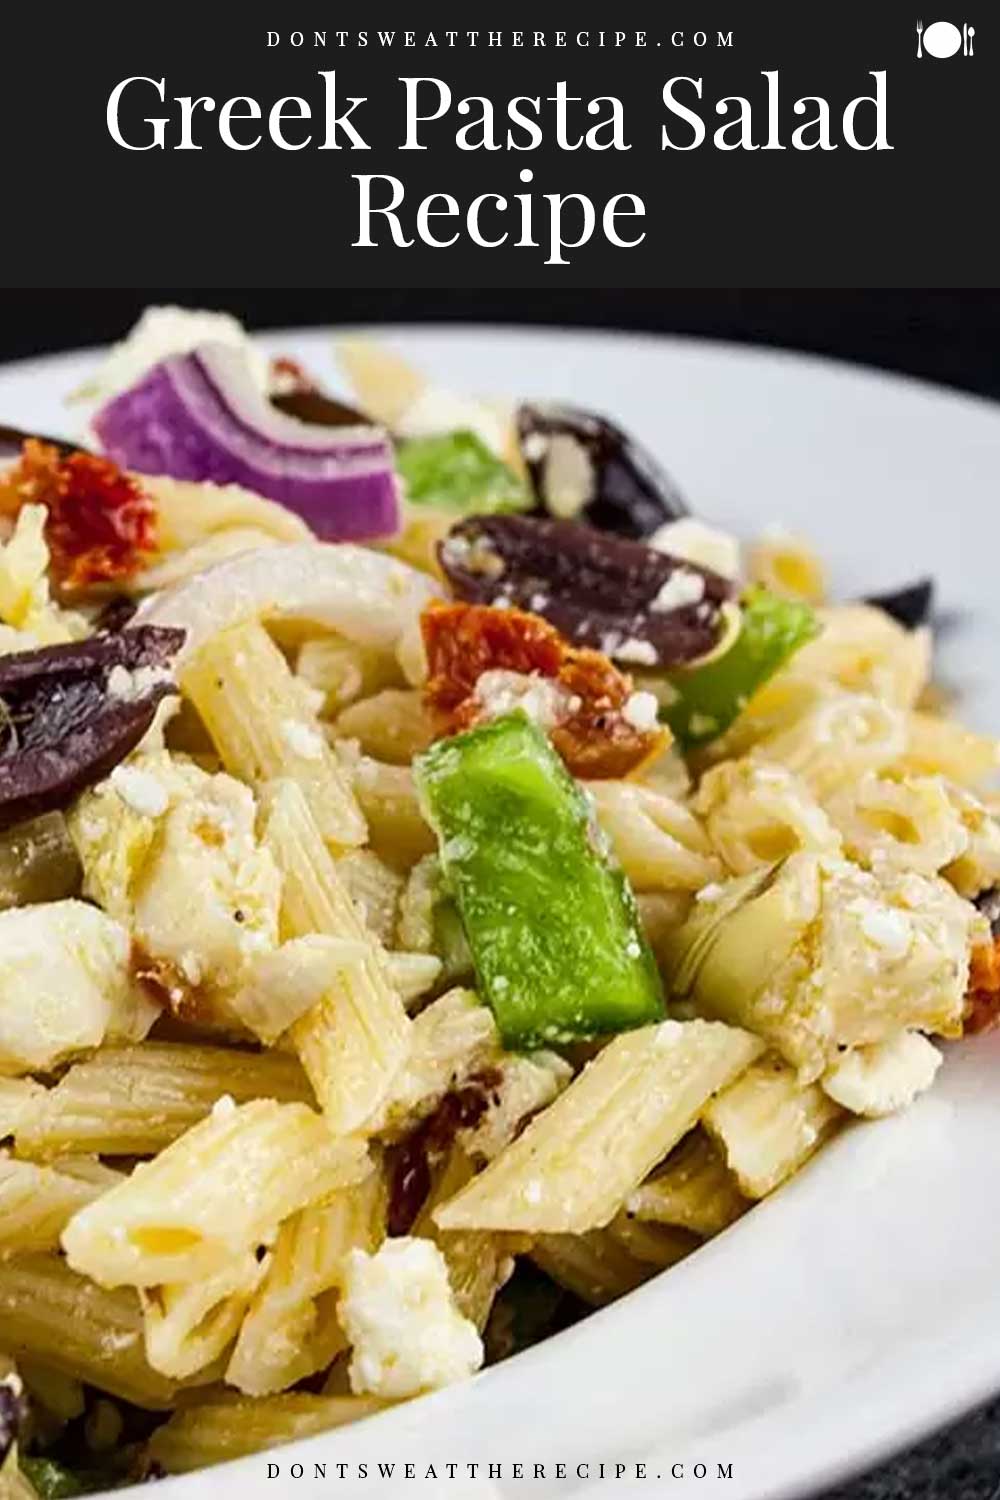 Greek Pasta Salad Recipe - Don't Sweat The Recipe